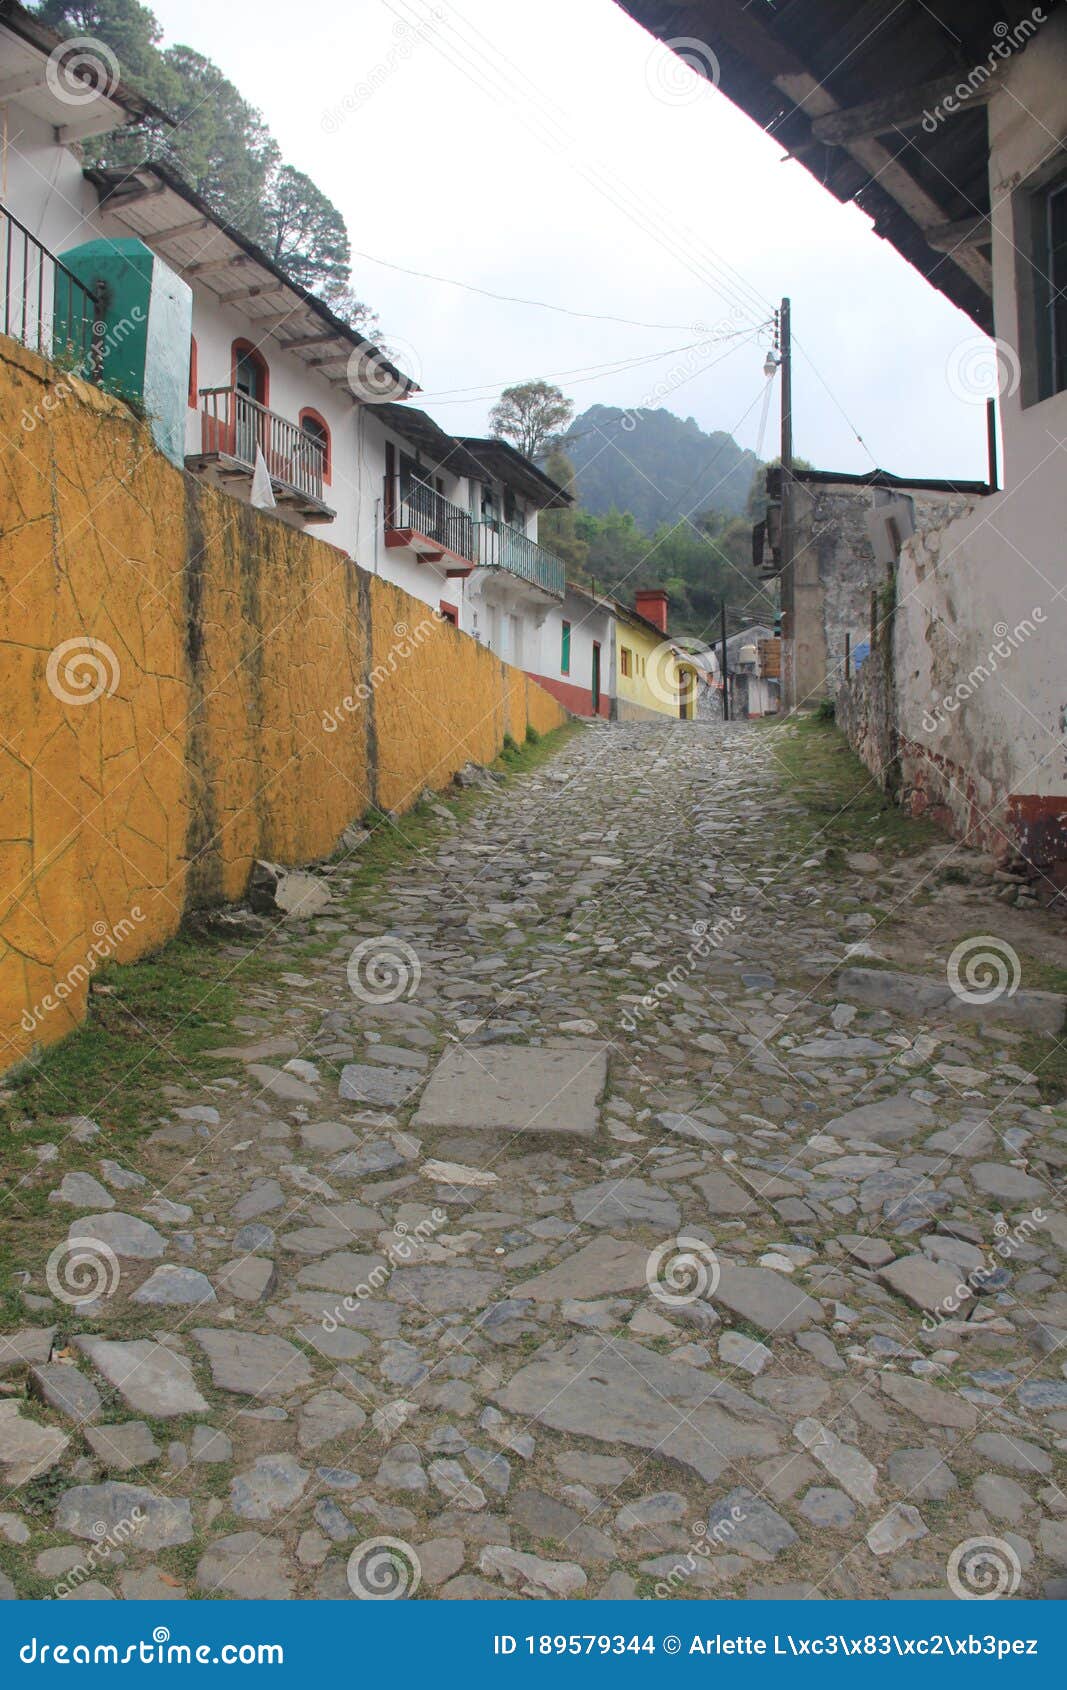 stone street, colorful houses and ruins of the la encarnacion foundry in zimapan hidalgo mexico